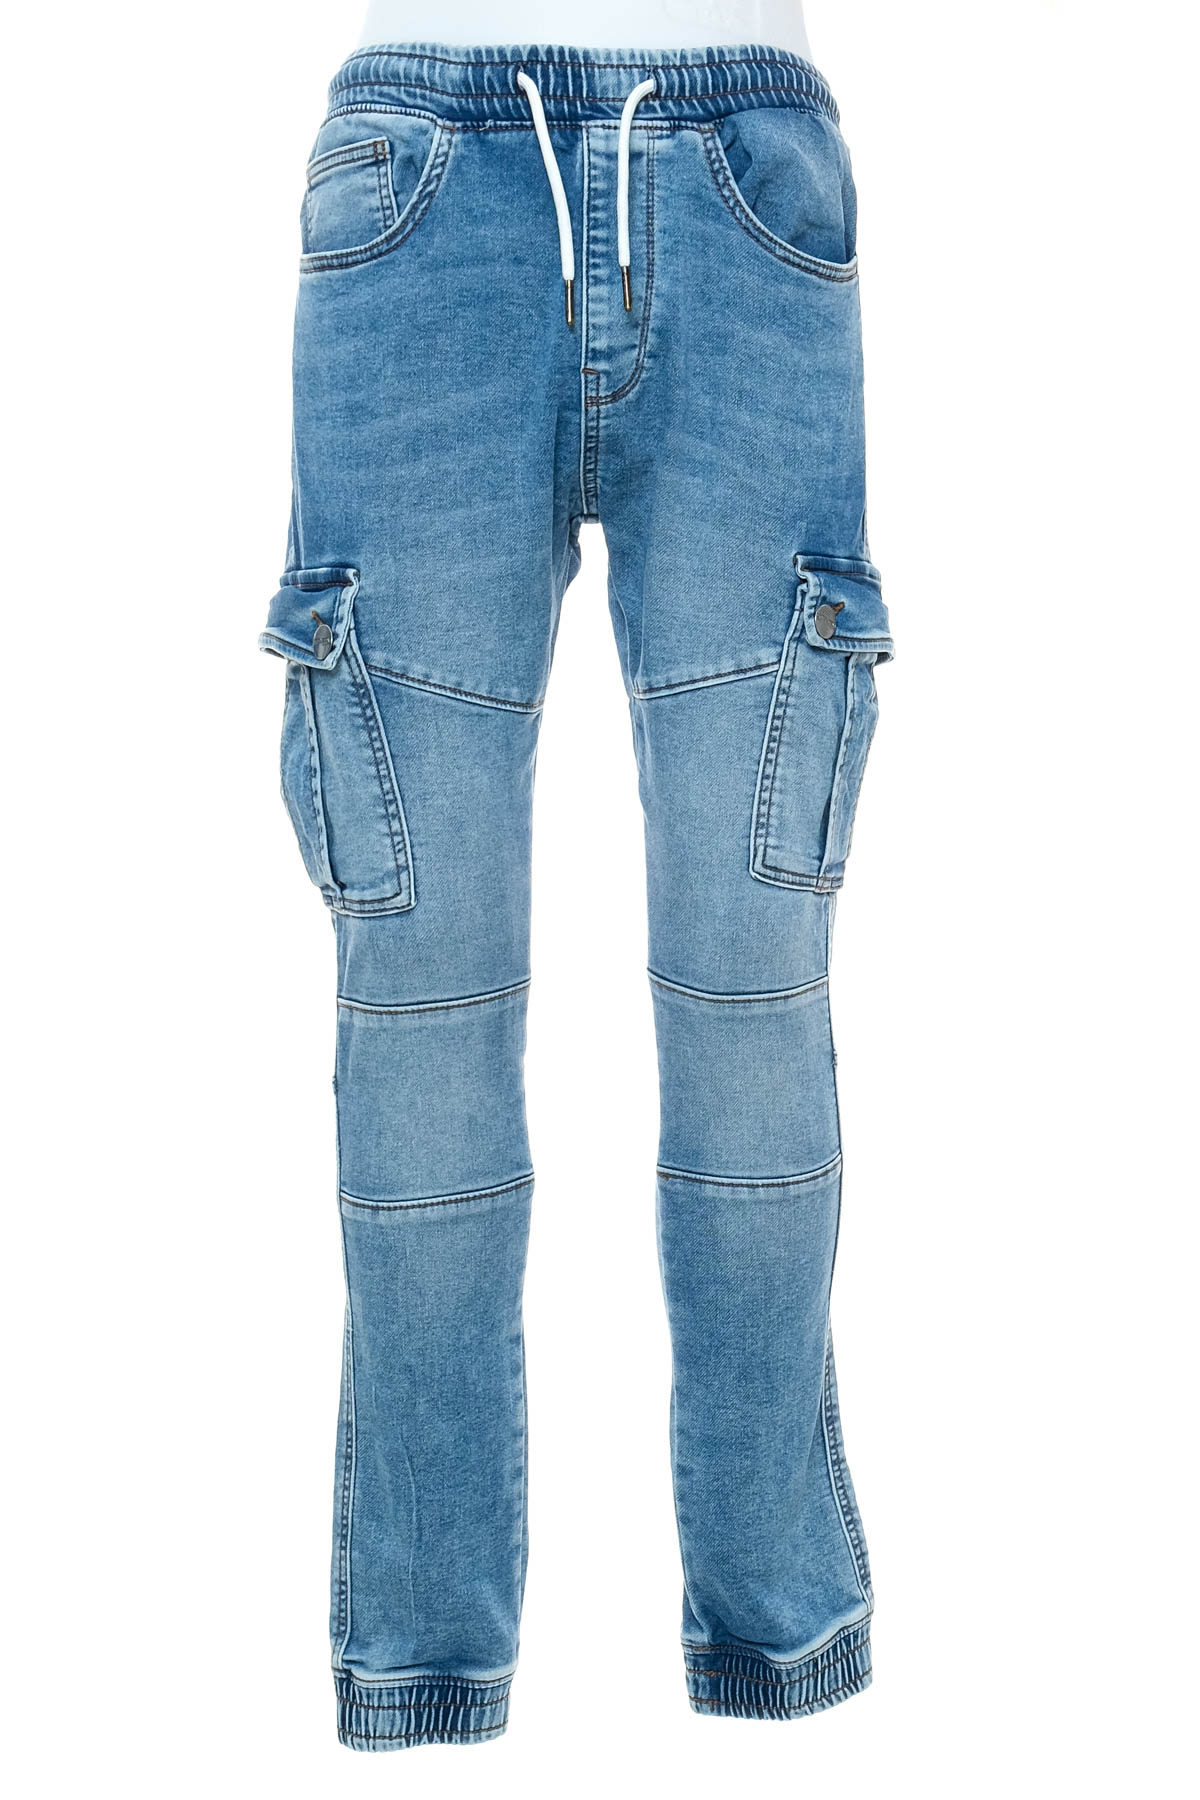 Men's jeans - Savvy - 0